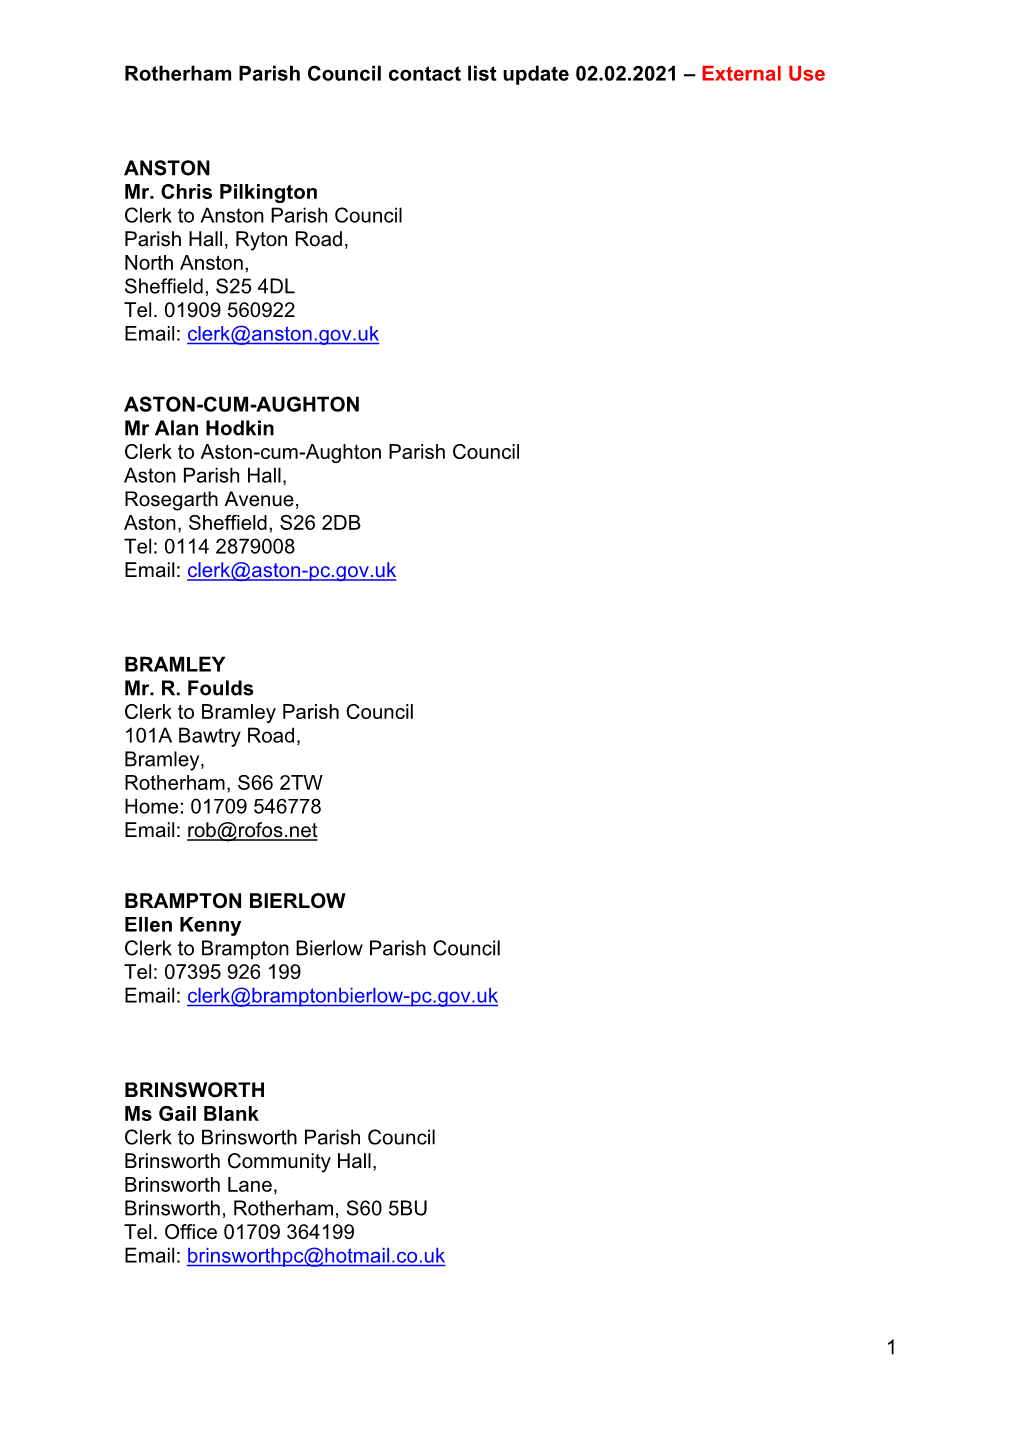 Rotherham Parish Council Contact List Update 02.02.2021 – External Use